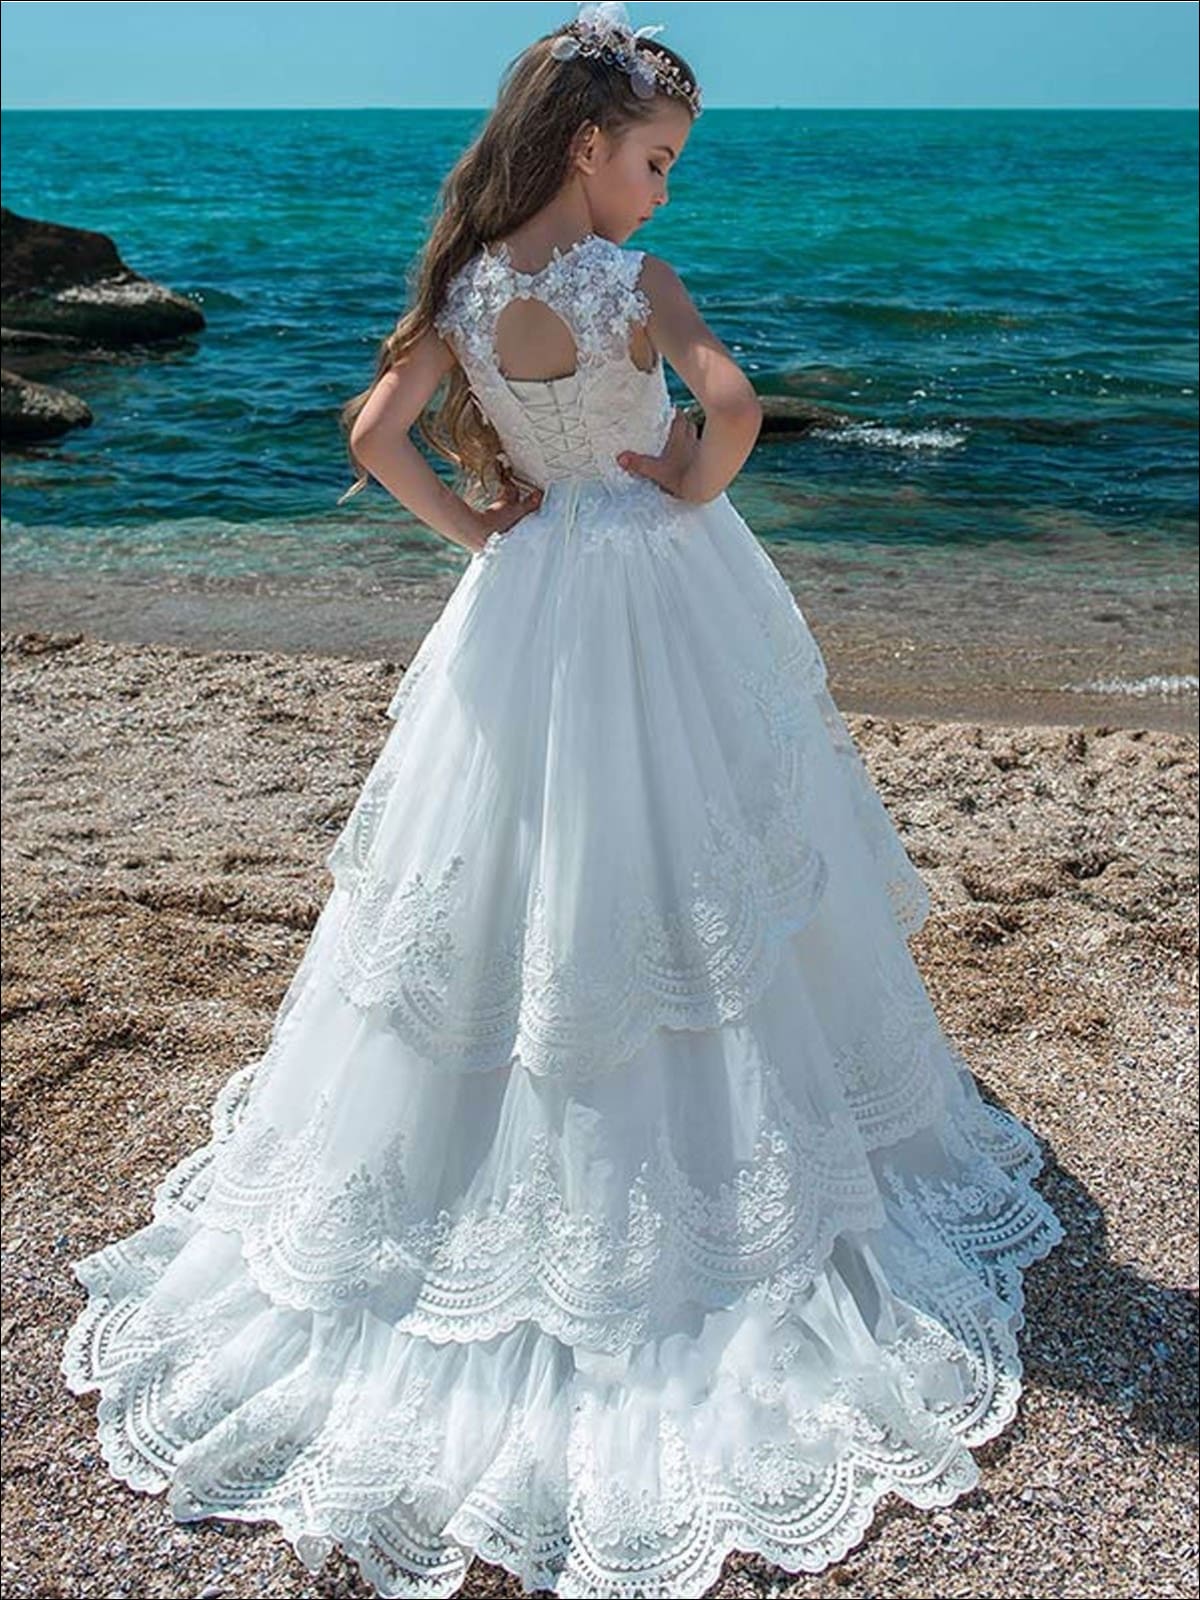 Amazon.com: FUSLW Shiny Toddler Flower Girl Dresses Elegant Lace Beading  White First Communion Dresses 2-12 Years Old: Clothing, Shoes & Jewelry